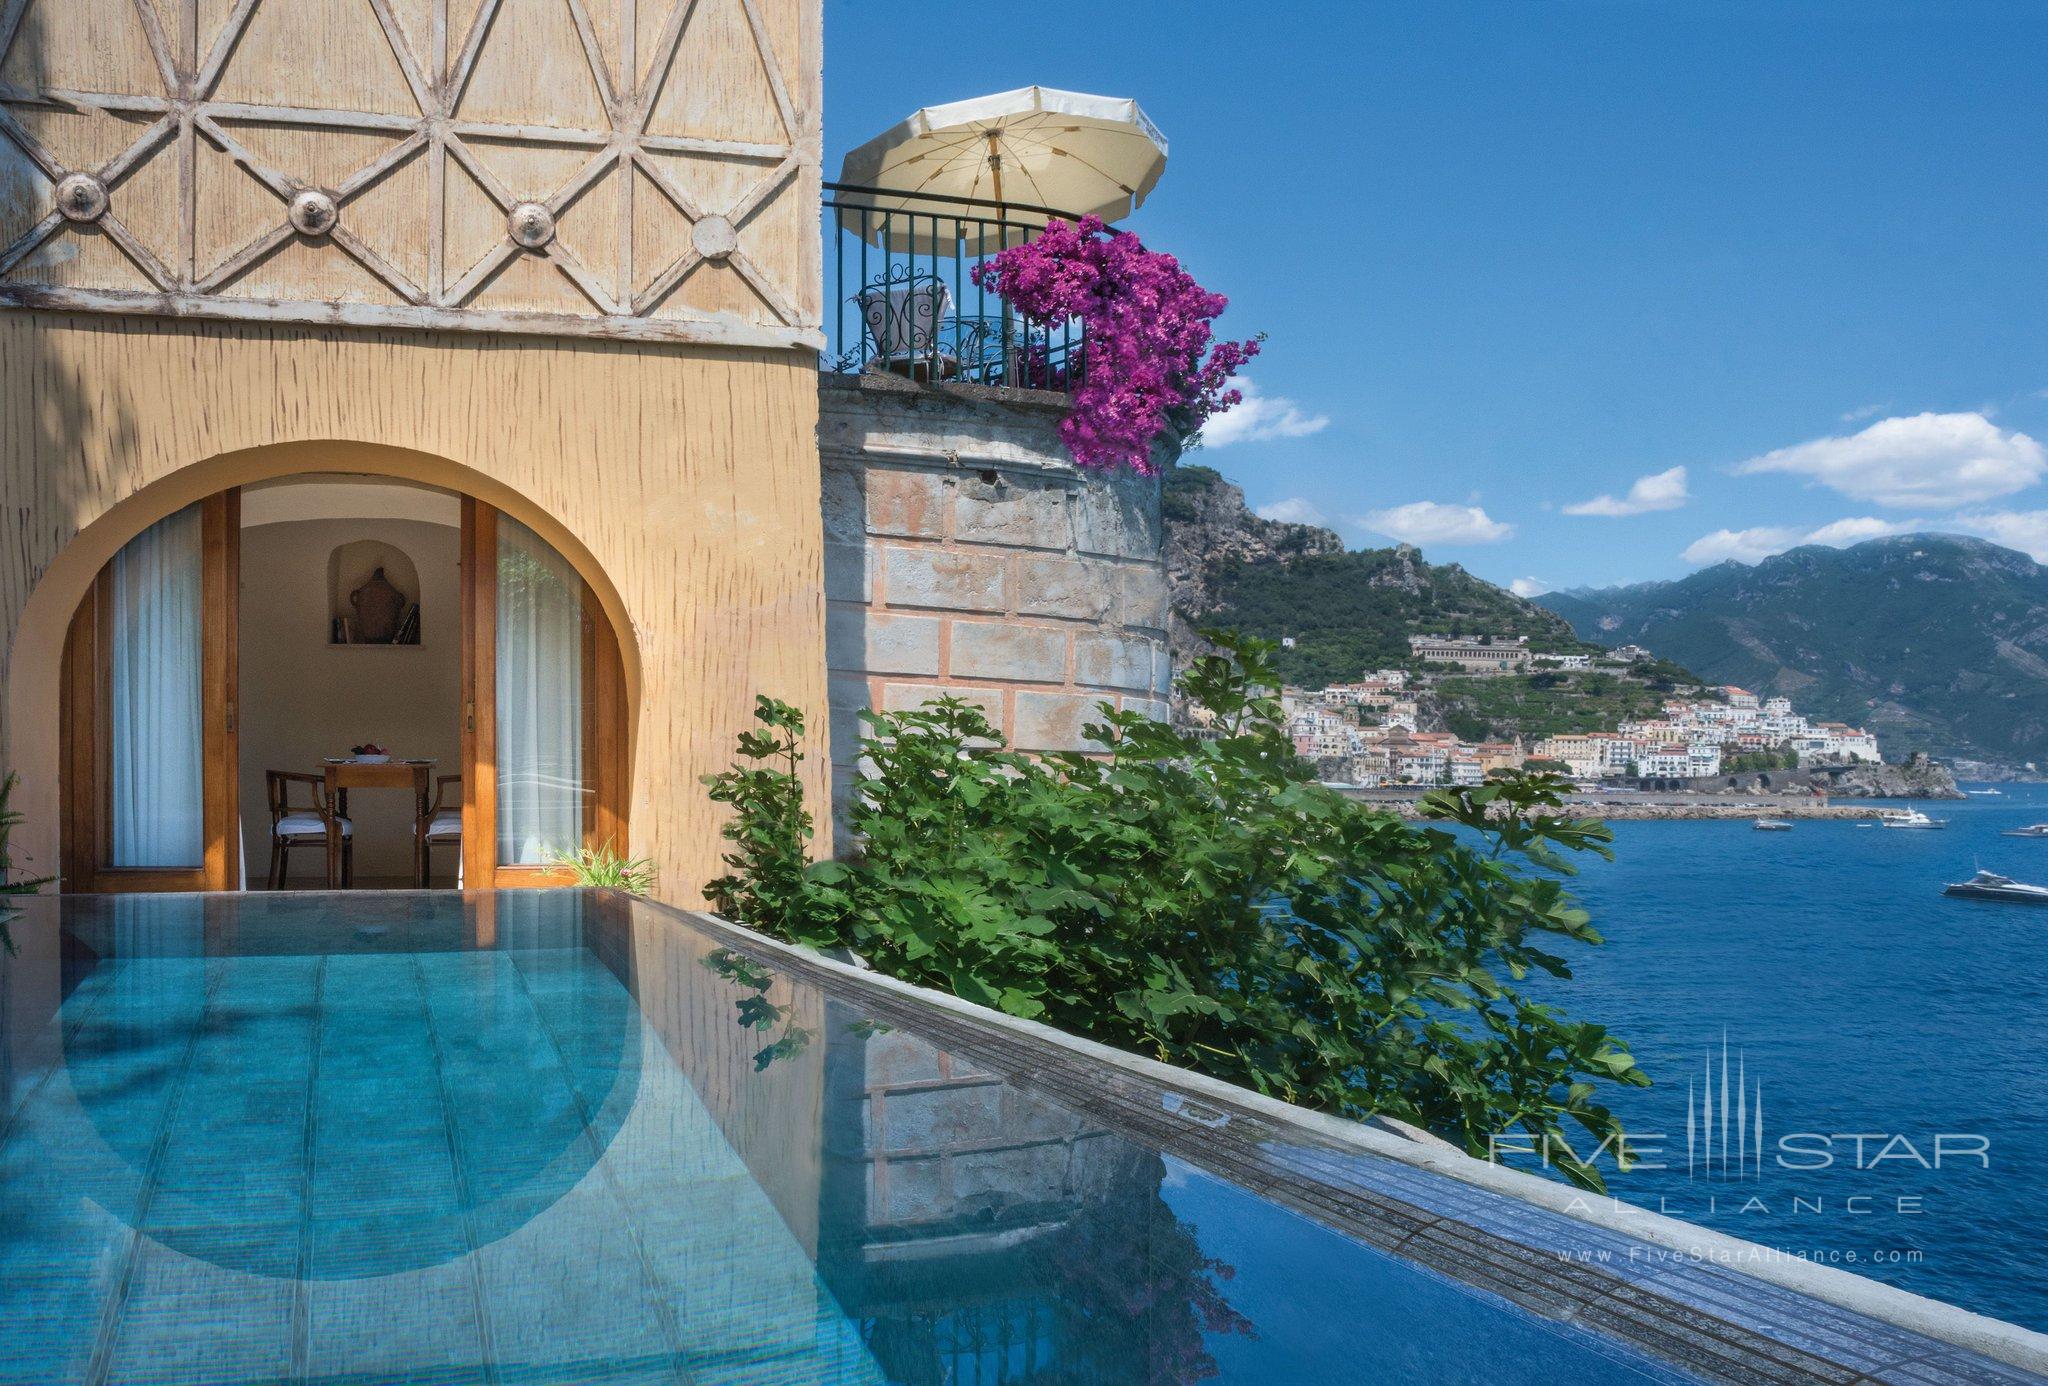 Pool Suite at the Santa Caterina Hotel on the Amalfi Coast